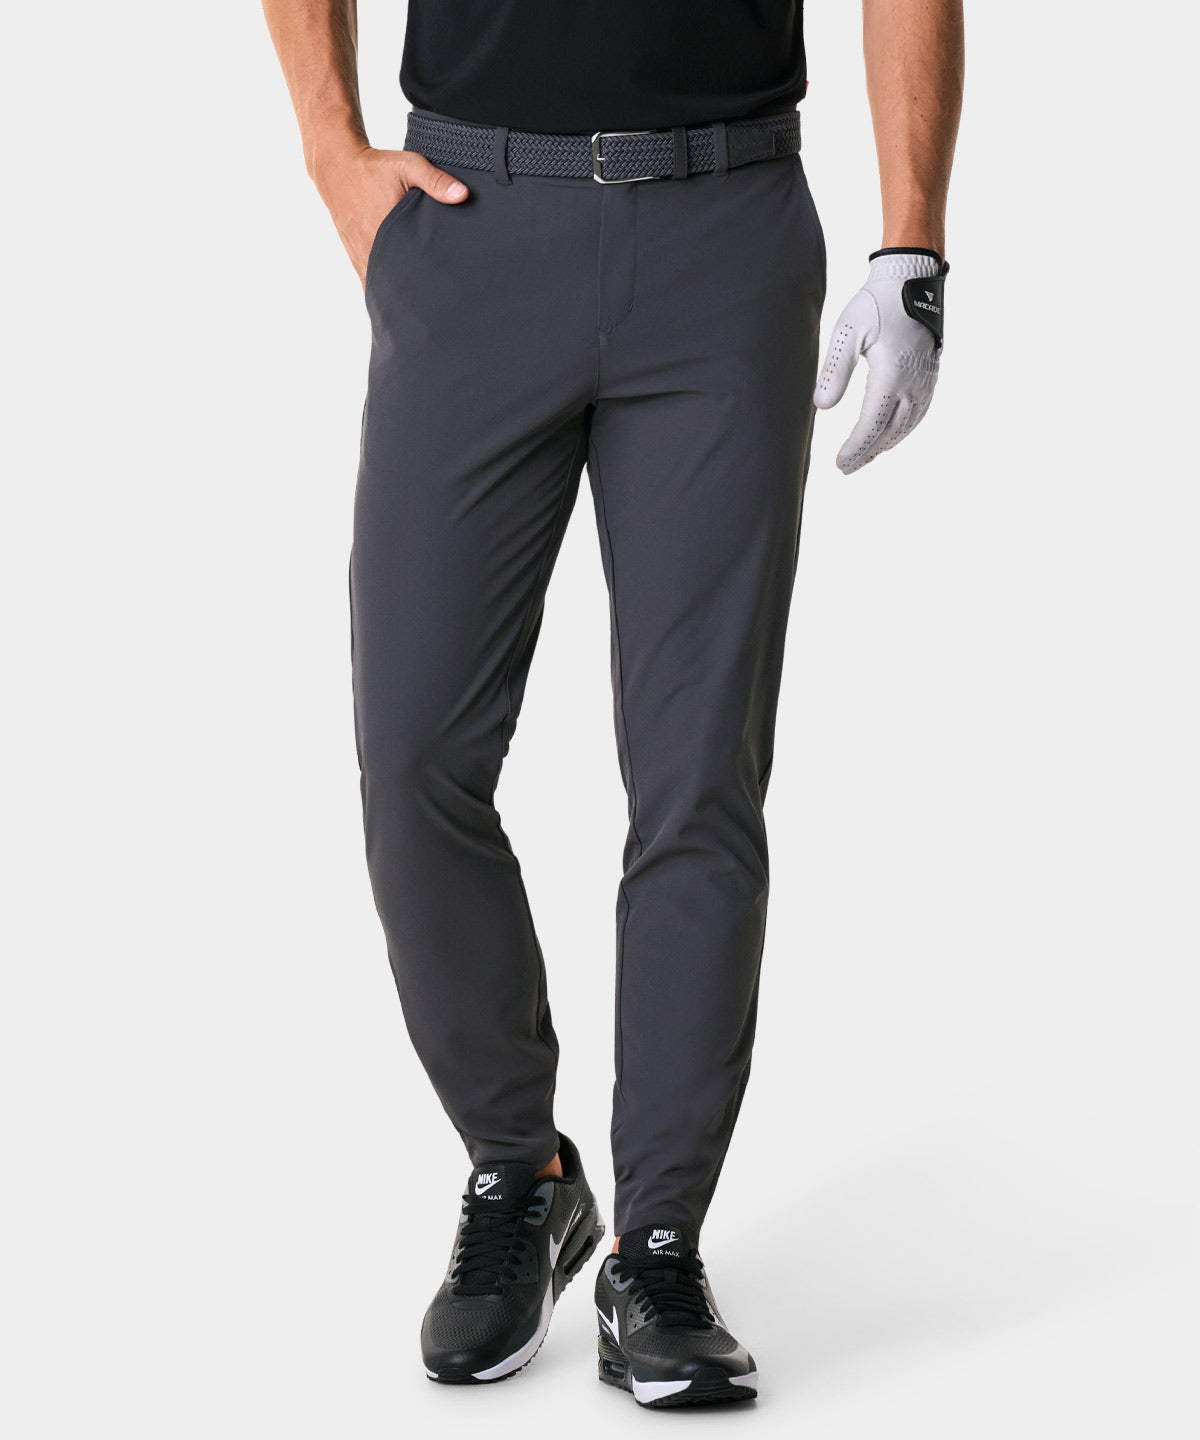 Radda Golf - @erikanderslang wearing the Palmer Pant in Khaki